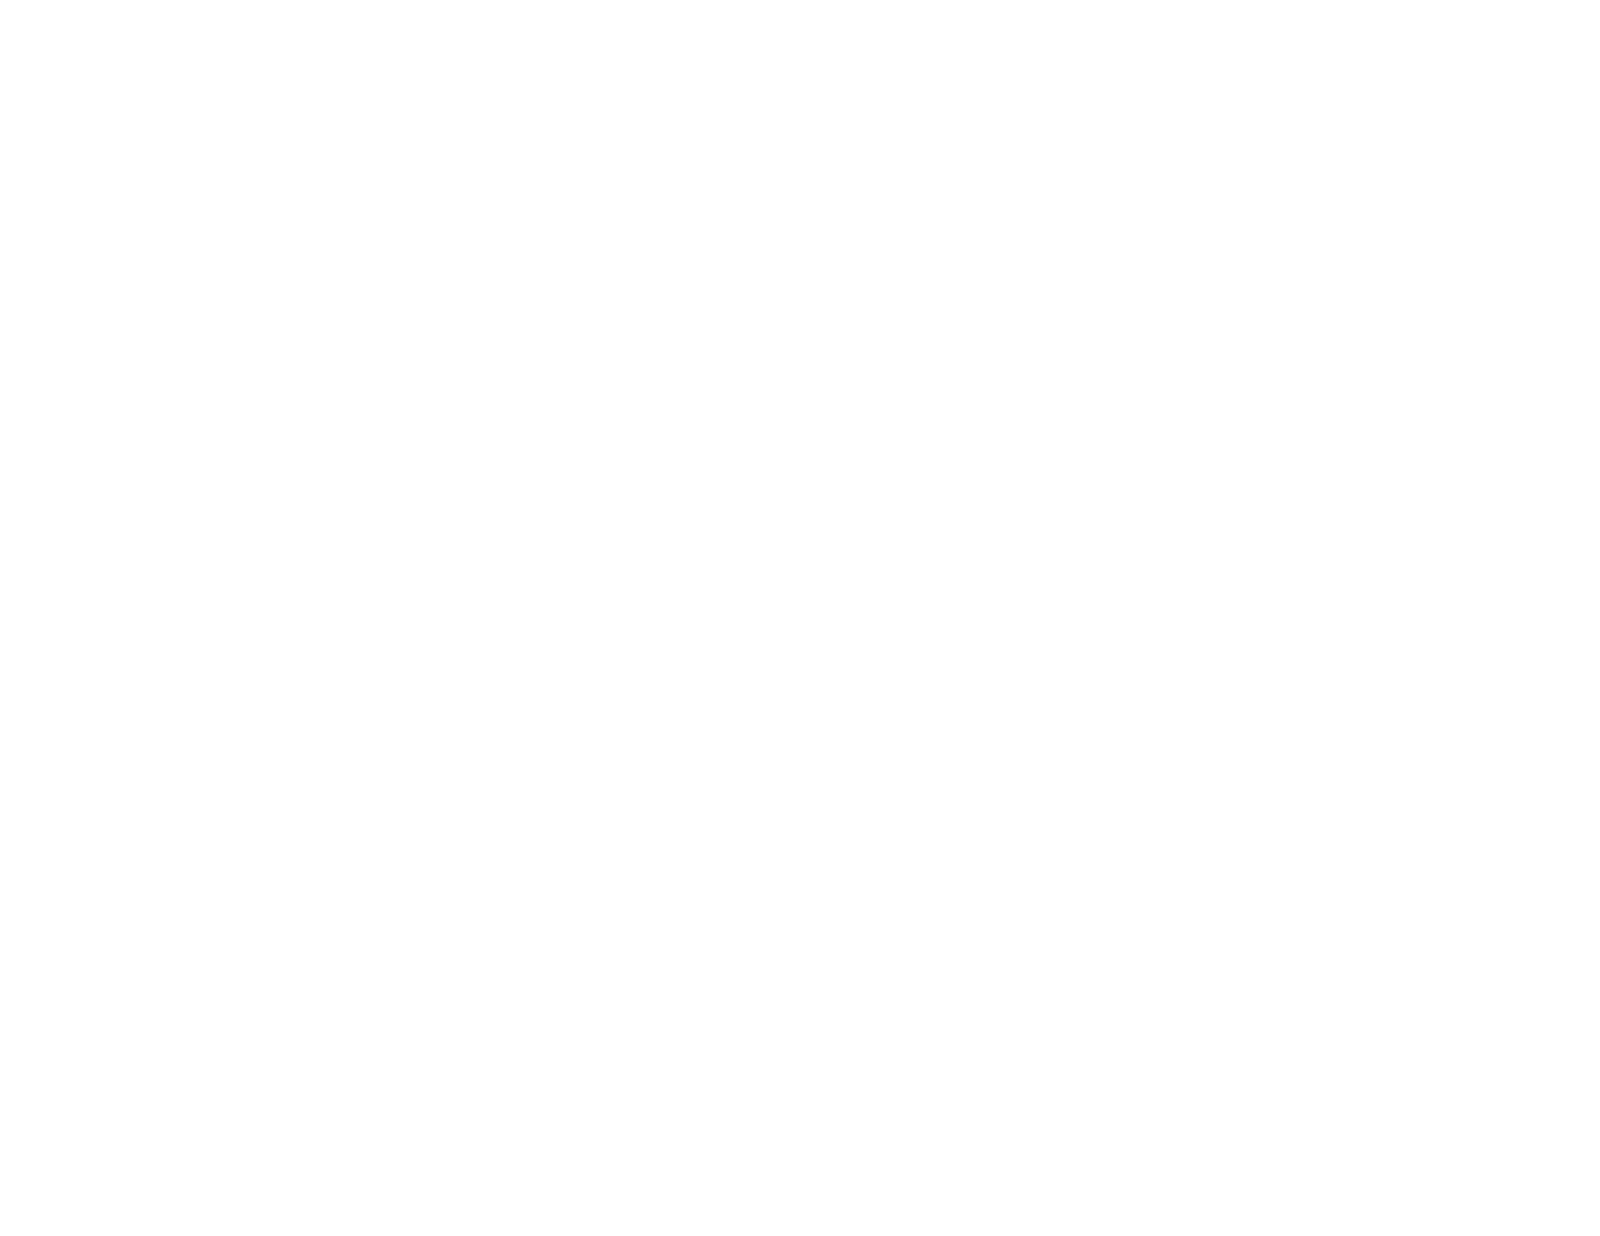 BabyDay-Horz-White-R-01.png